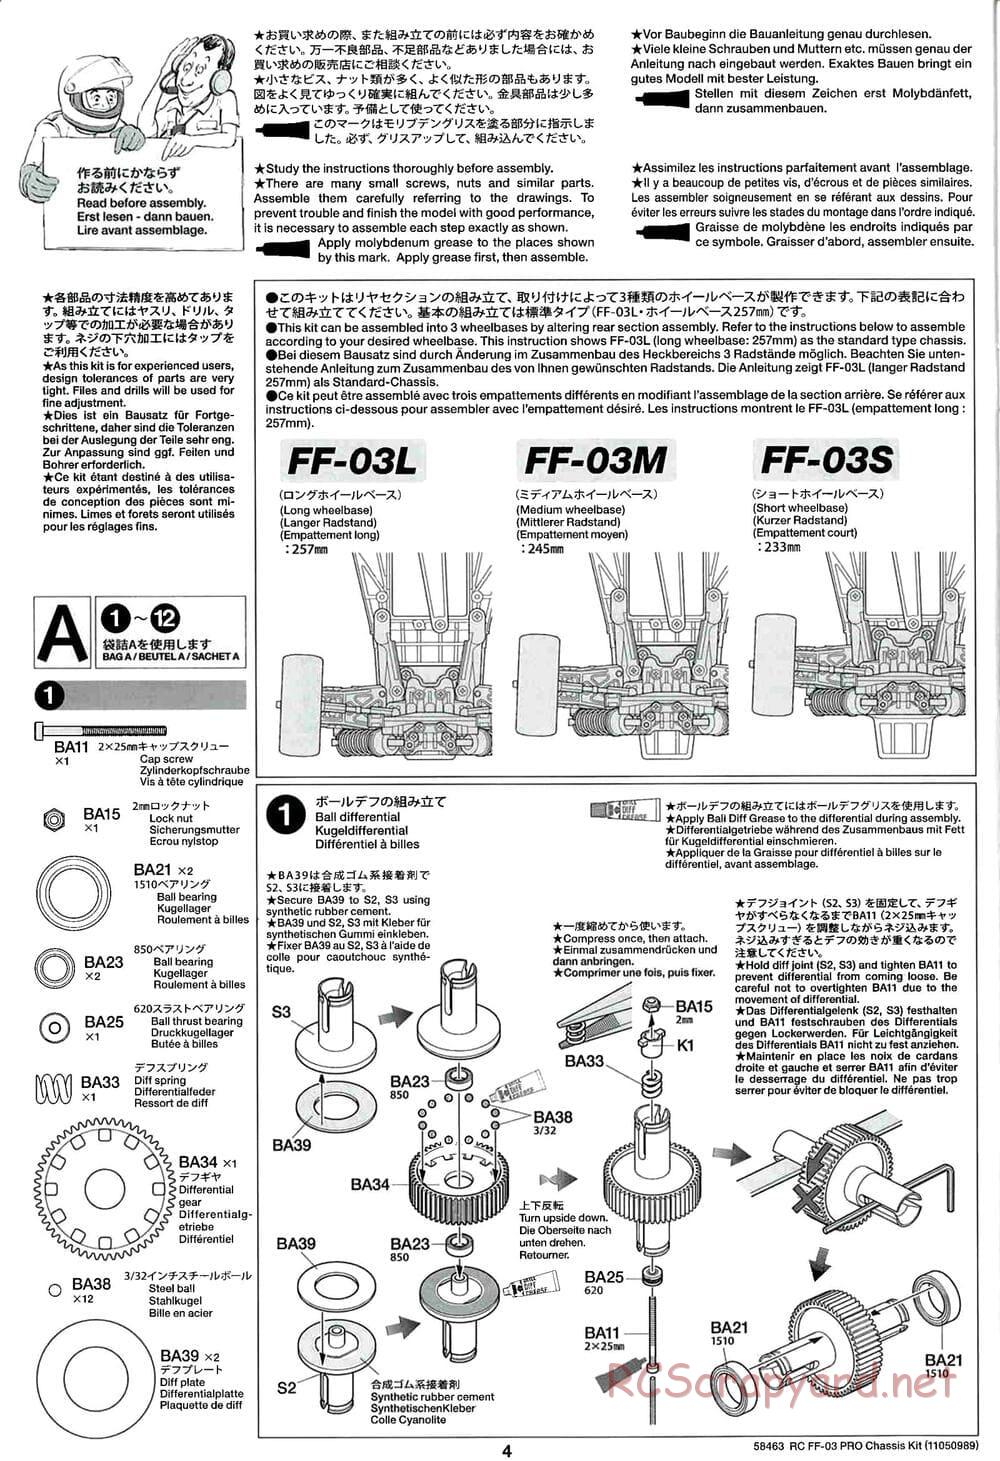 Tamiya - FF-03 Pro Chassis - Manual - Page 4